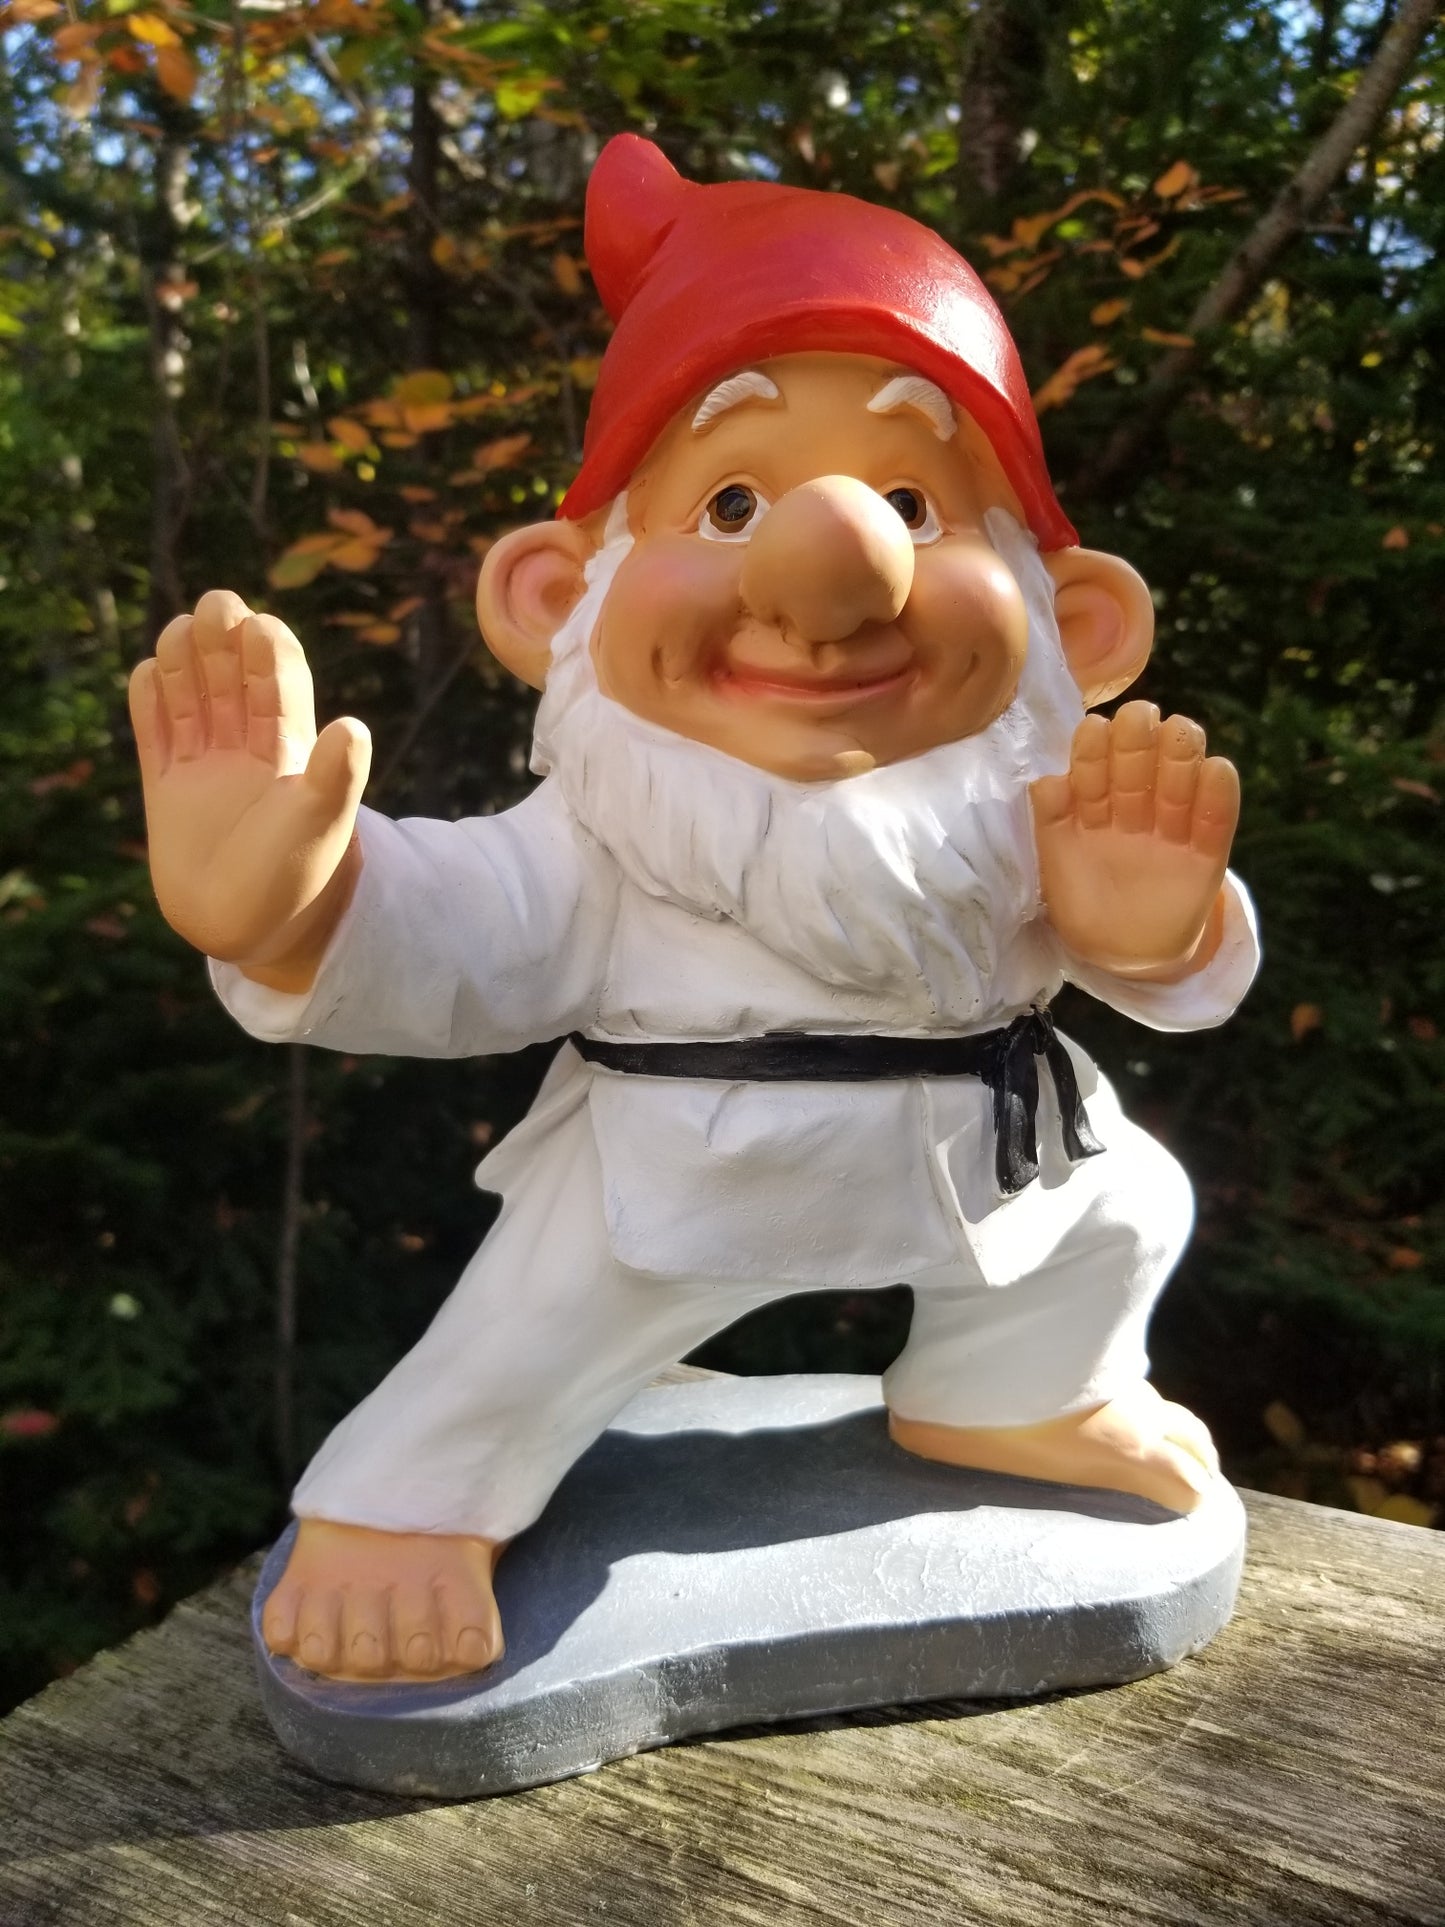 karate gnome statue for sale